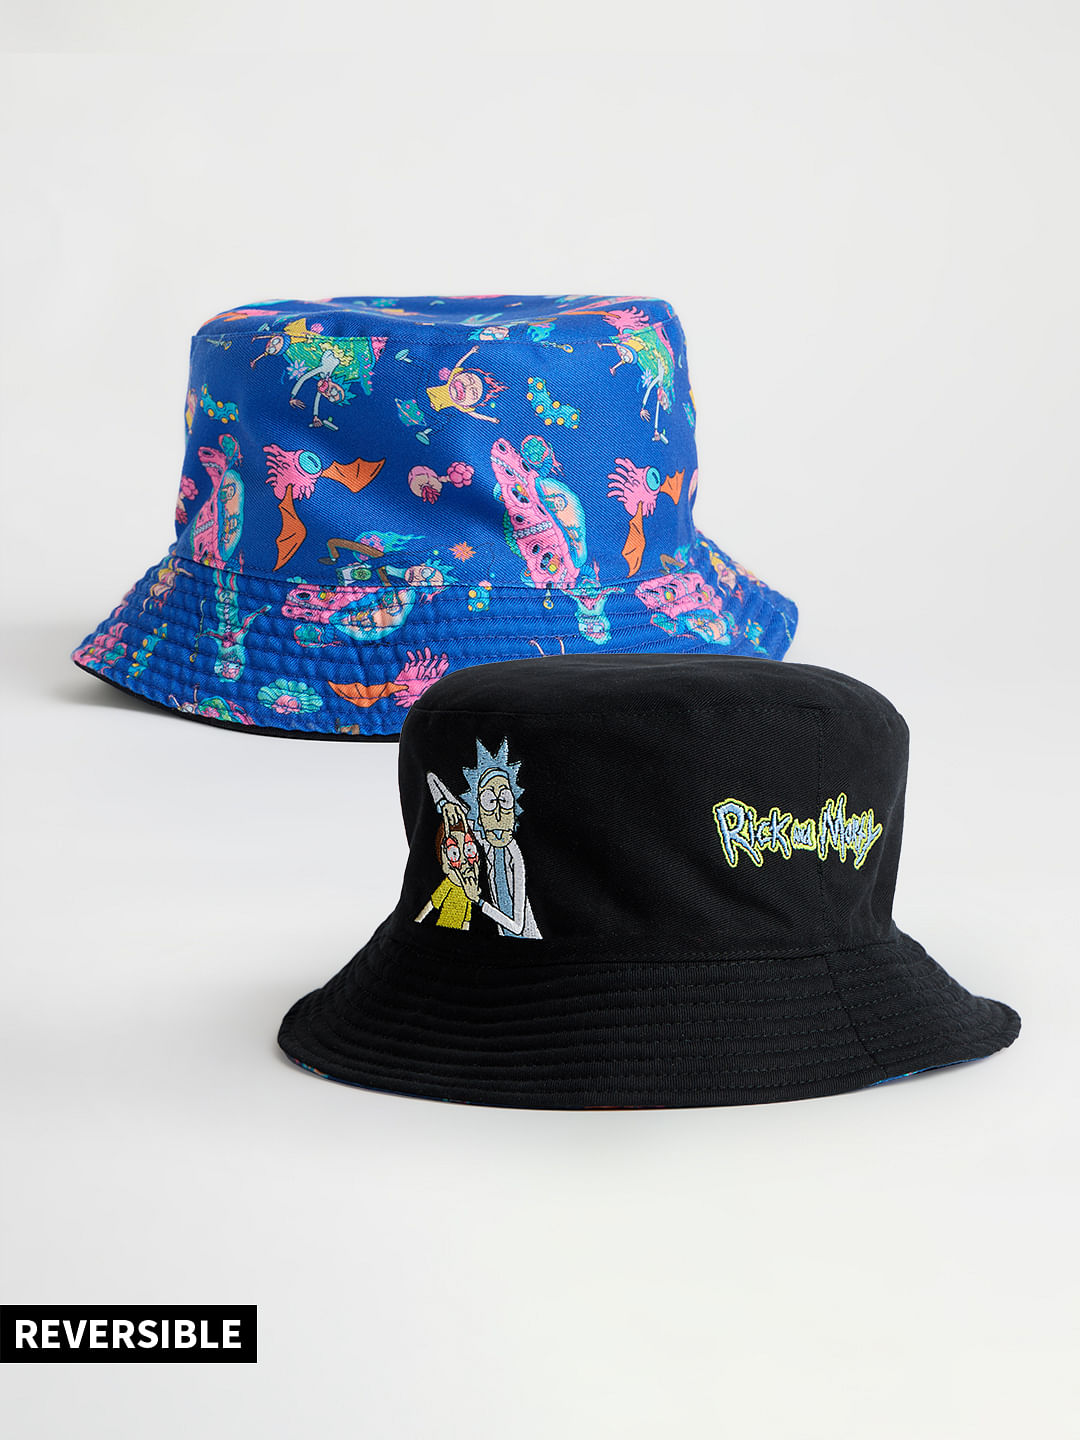 Buy Rick and Morty: Adventure Bucket Hat Online